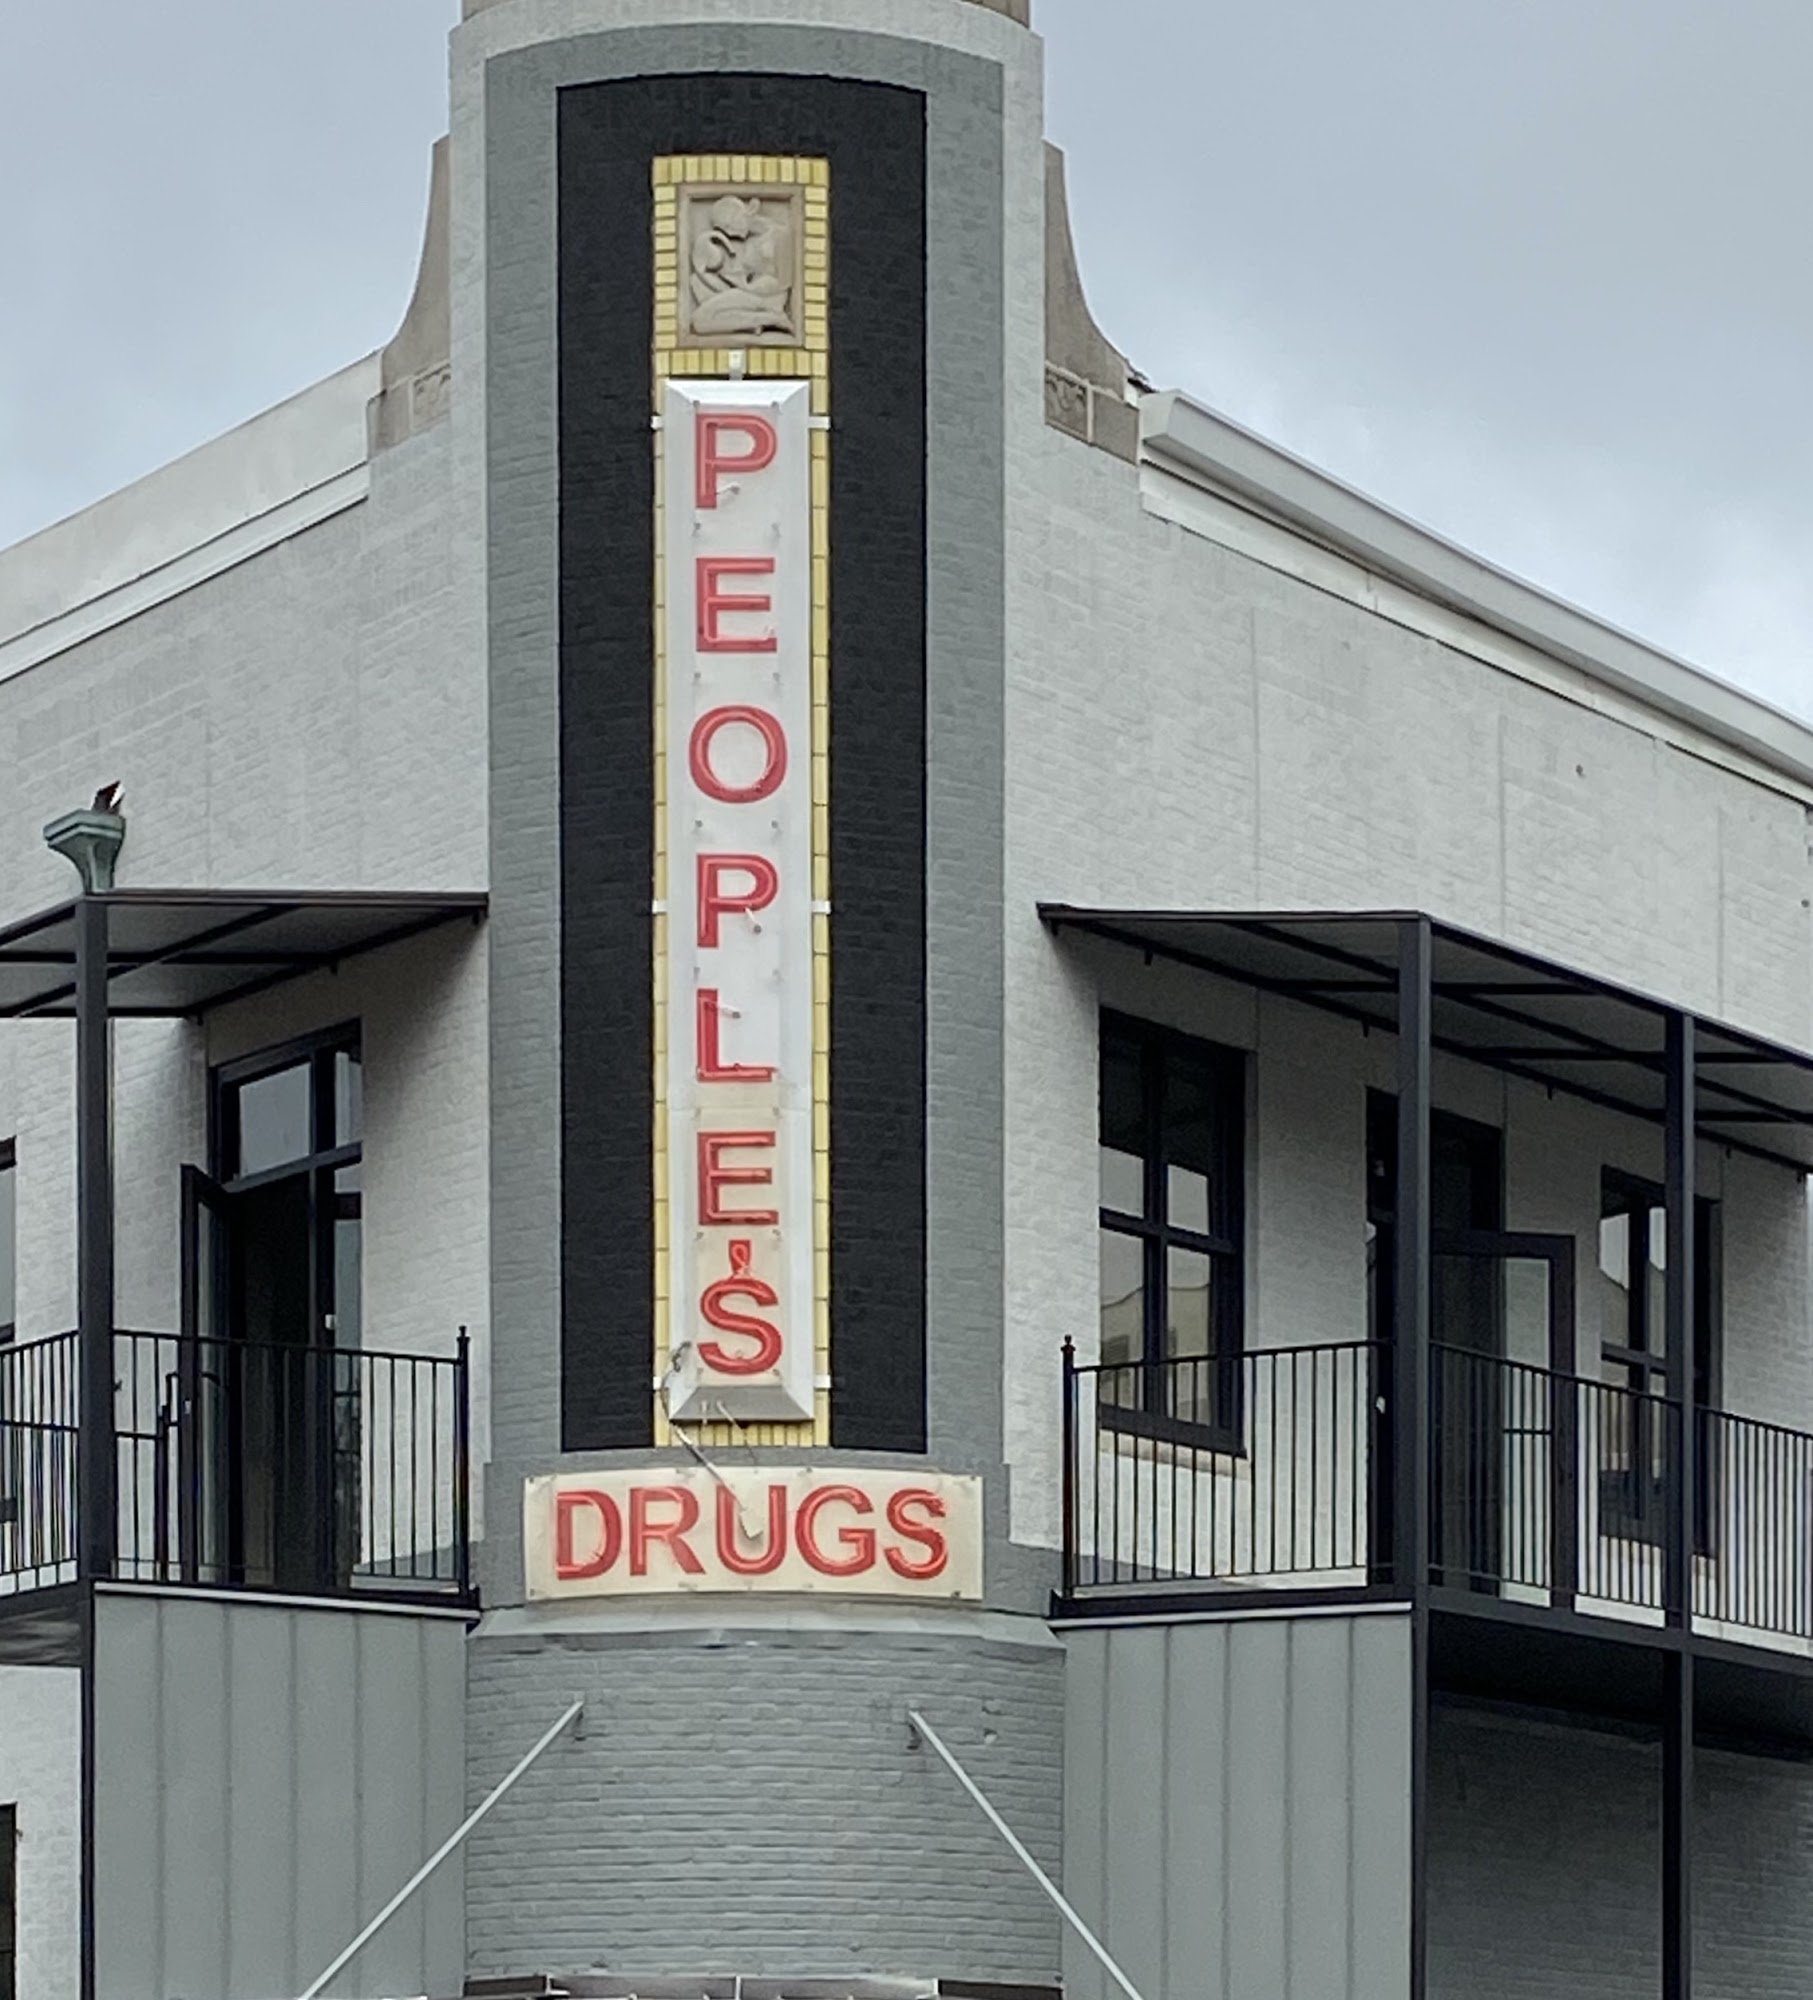 People's Drug Store